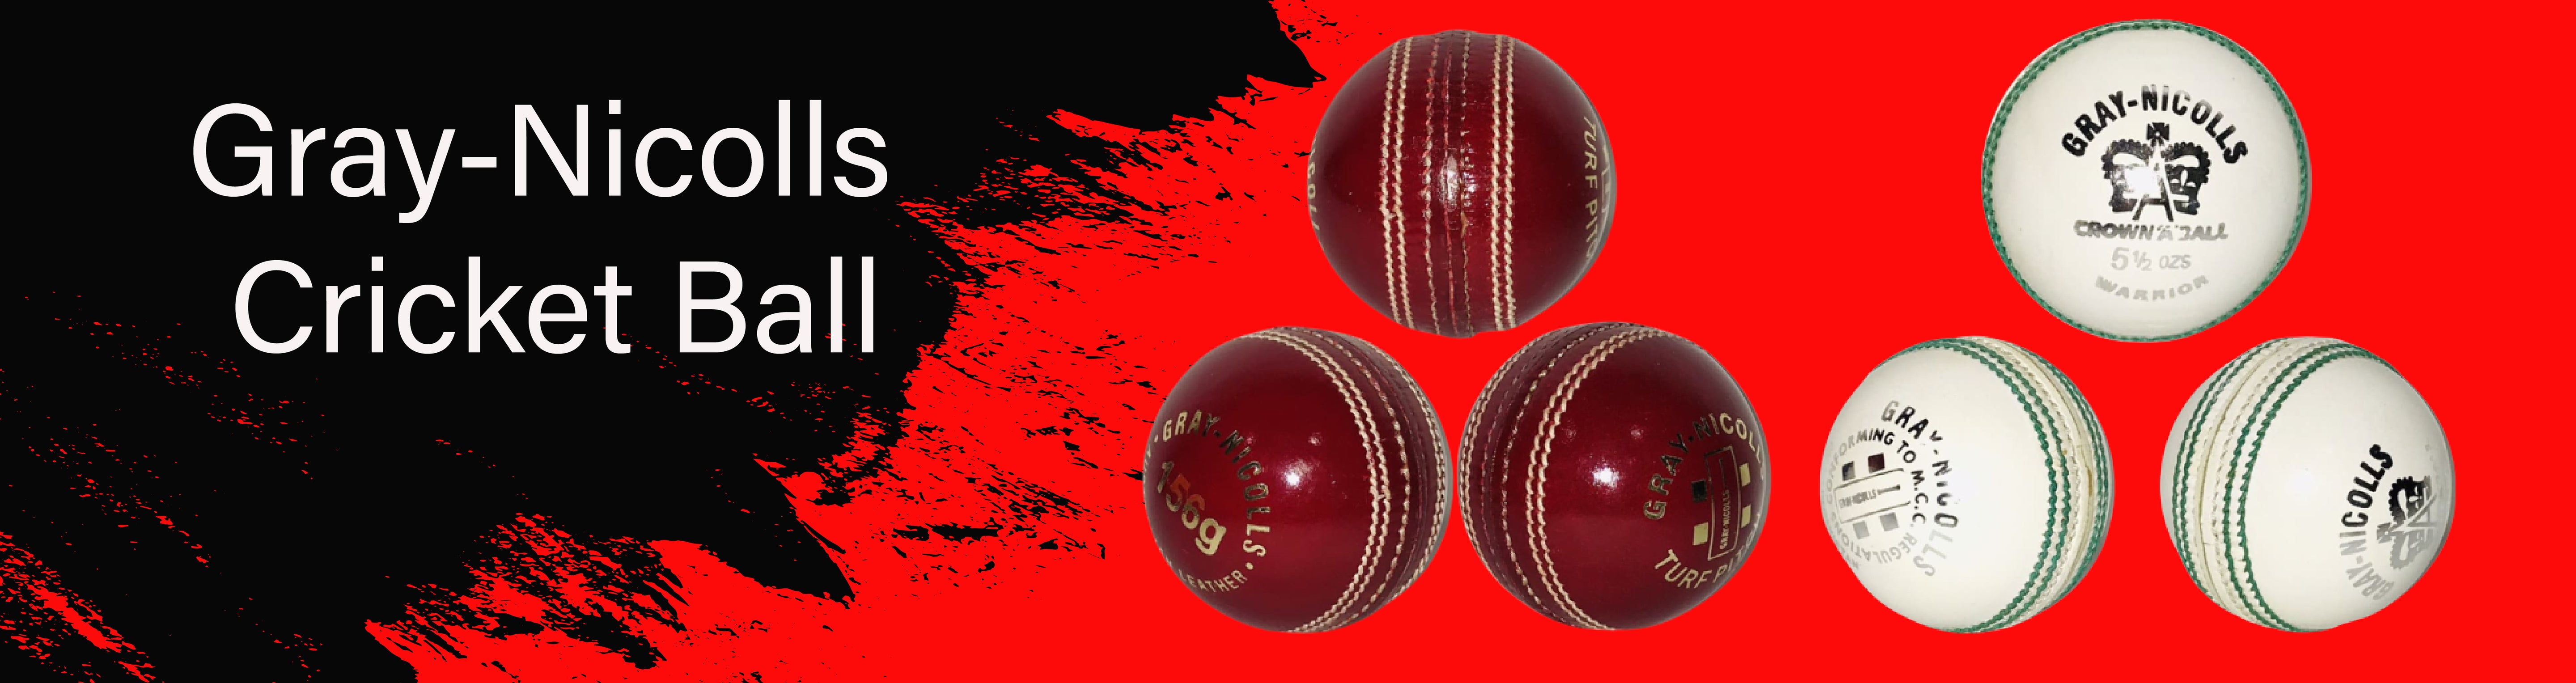 BALL - Gray-Nicolls Cricket Ball -